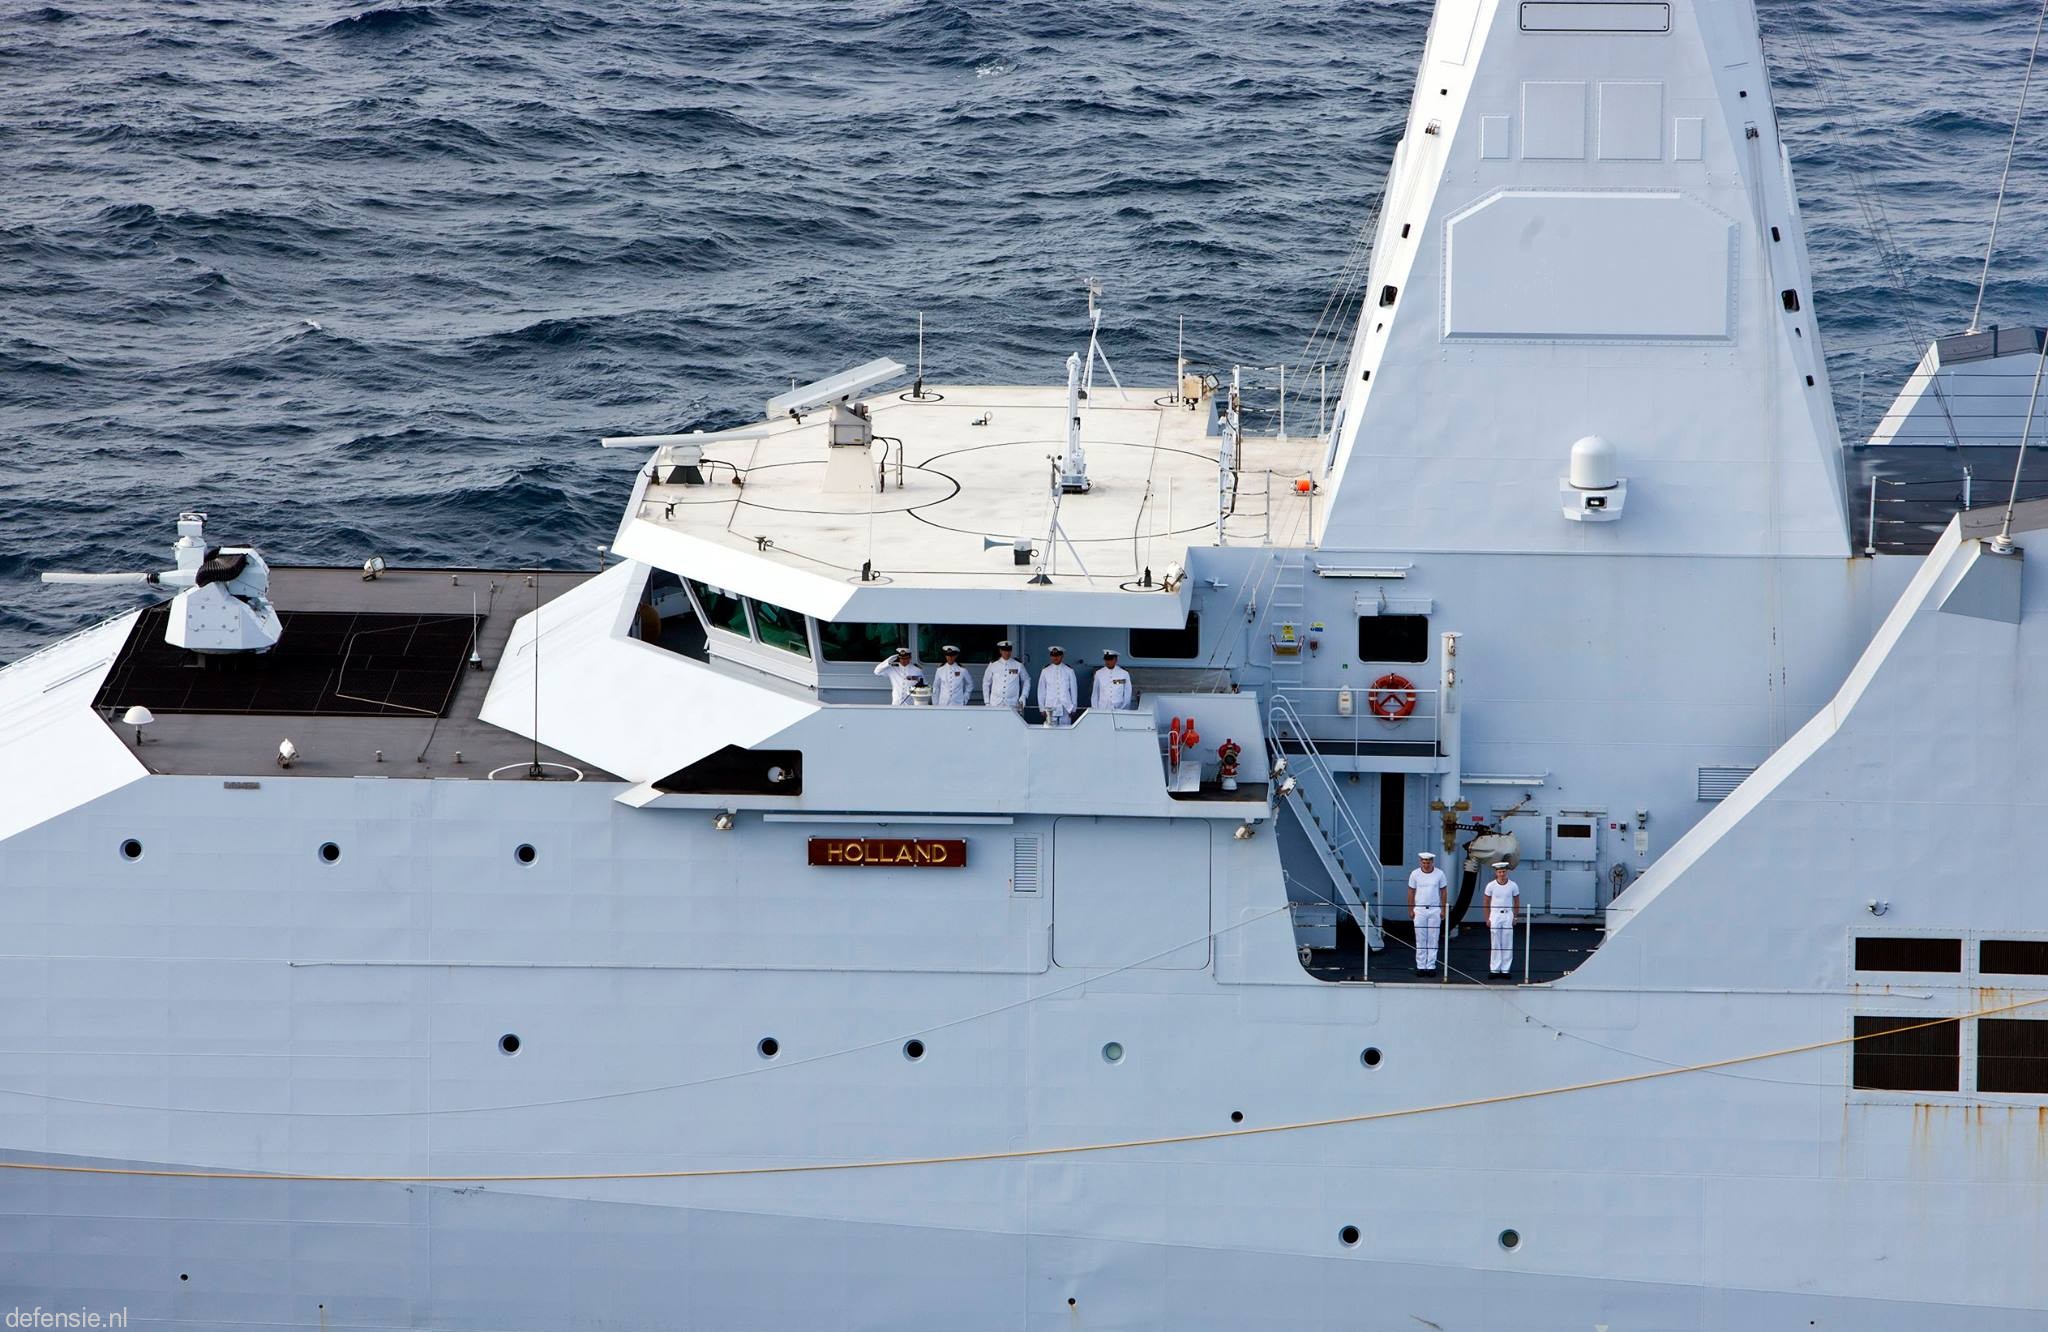 p-840 hnlms holland offshore patrol vessel opv royal netherlands navy 27